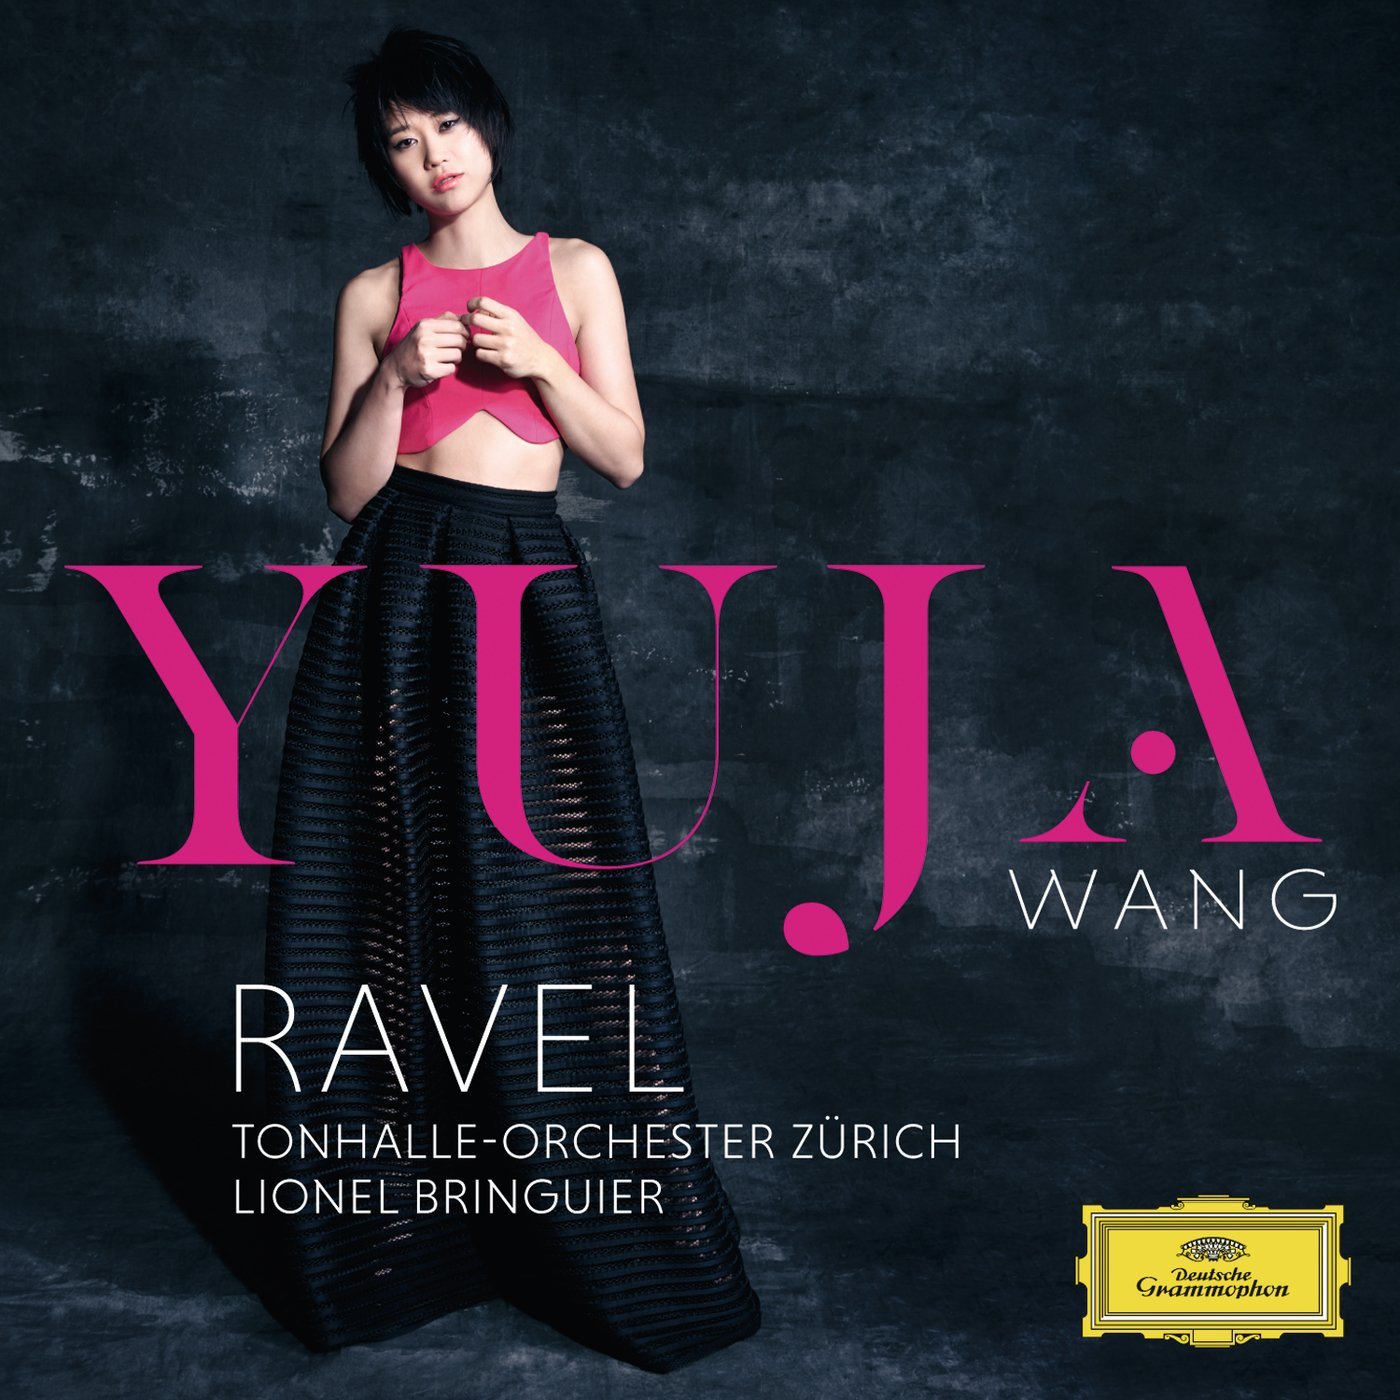 Art for Ravel: Piano Concerto In G - 3. Presto by Yuja Wang; Lionel Bringuier: Tonhalle Orchestra